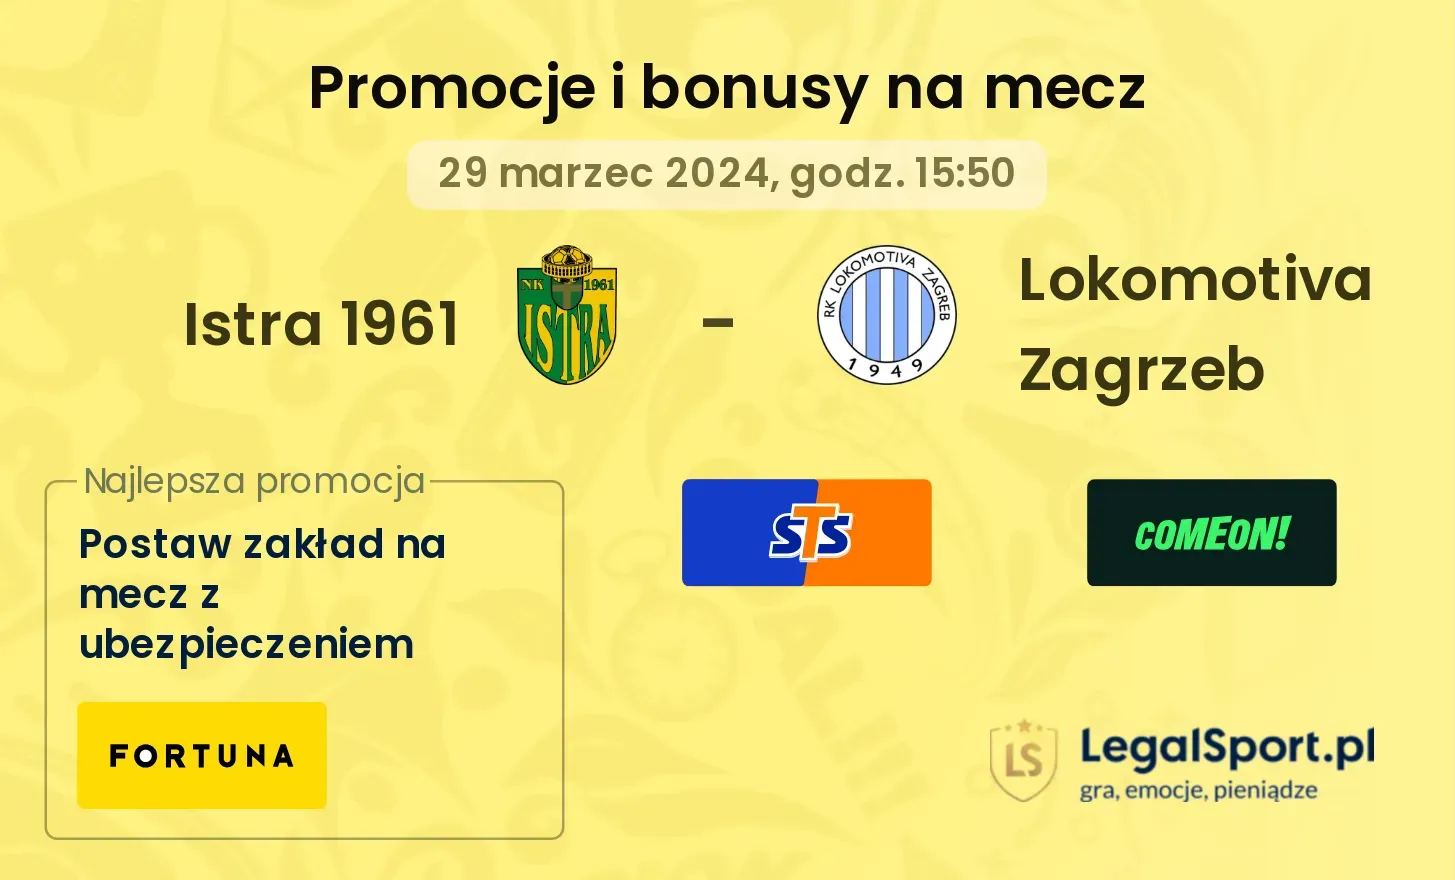 Istra 1961 - Lokomotiva Zagrzeb promocje bonusy na mecz